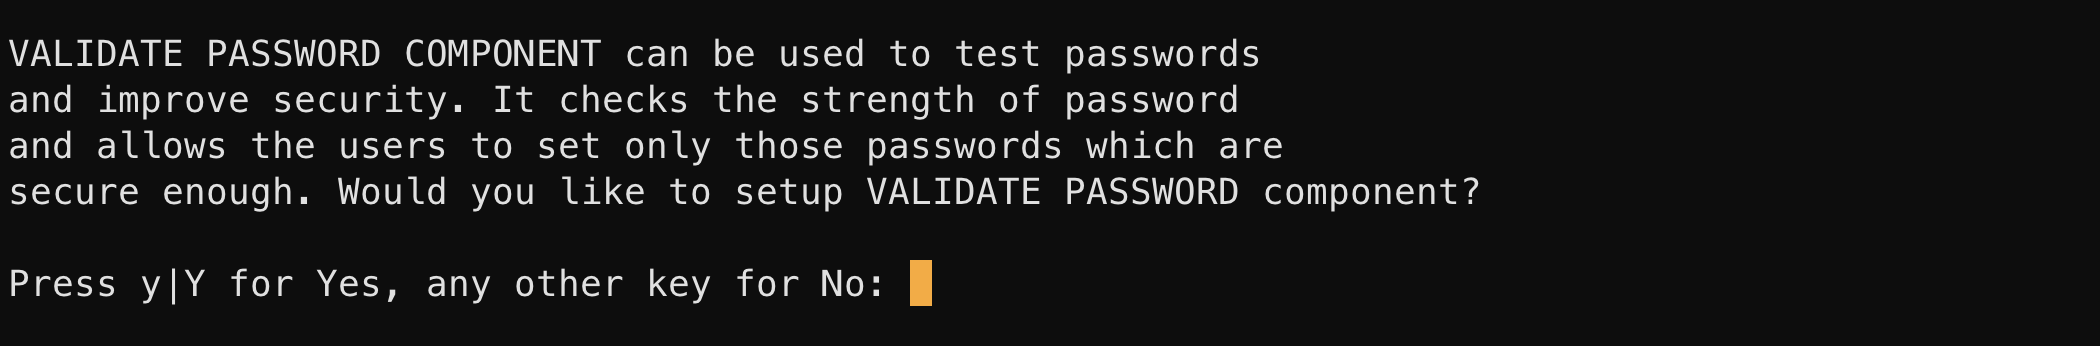 Validate Password Component